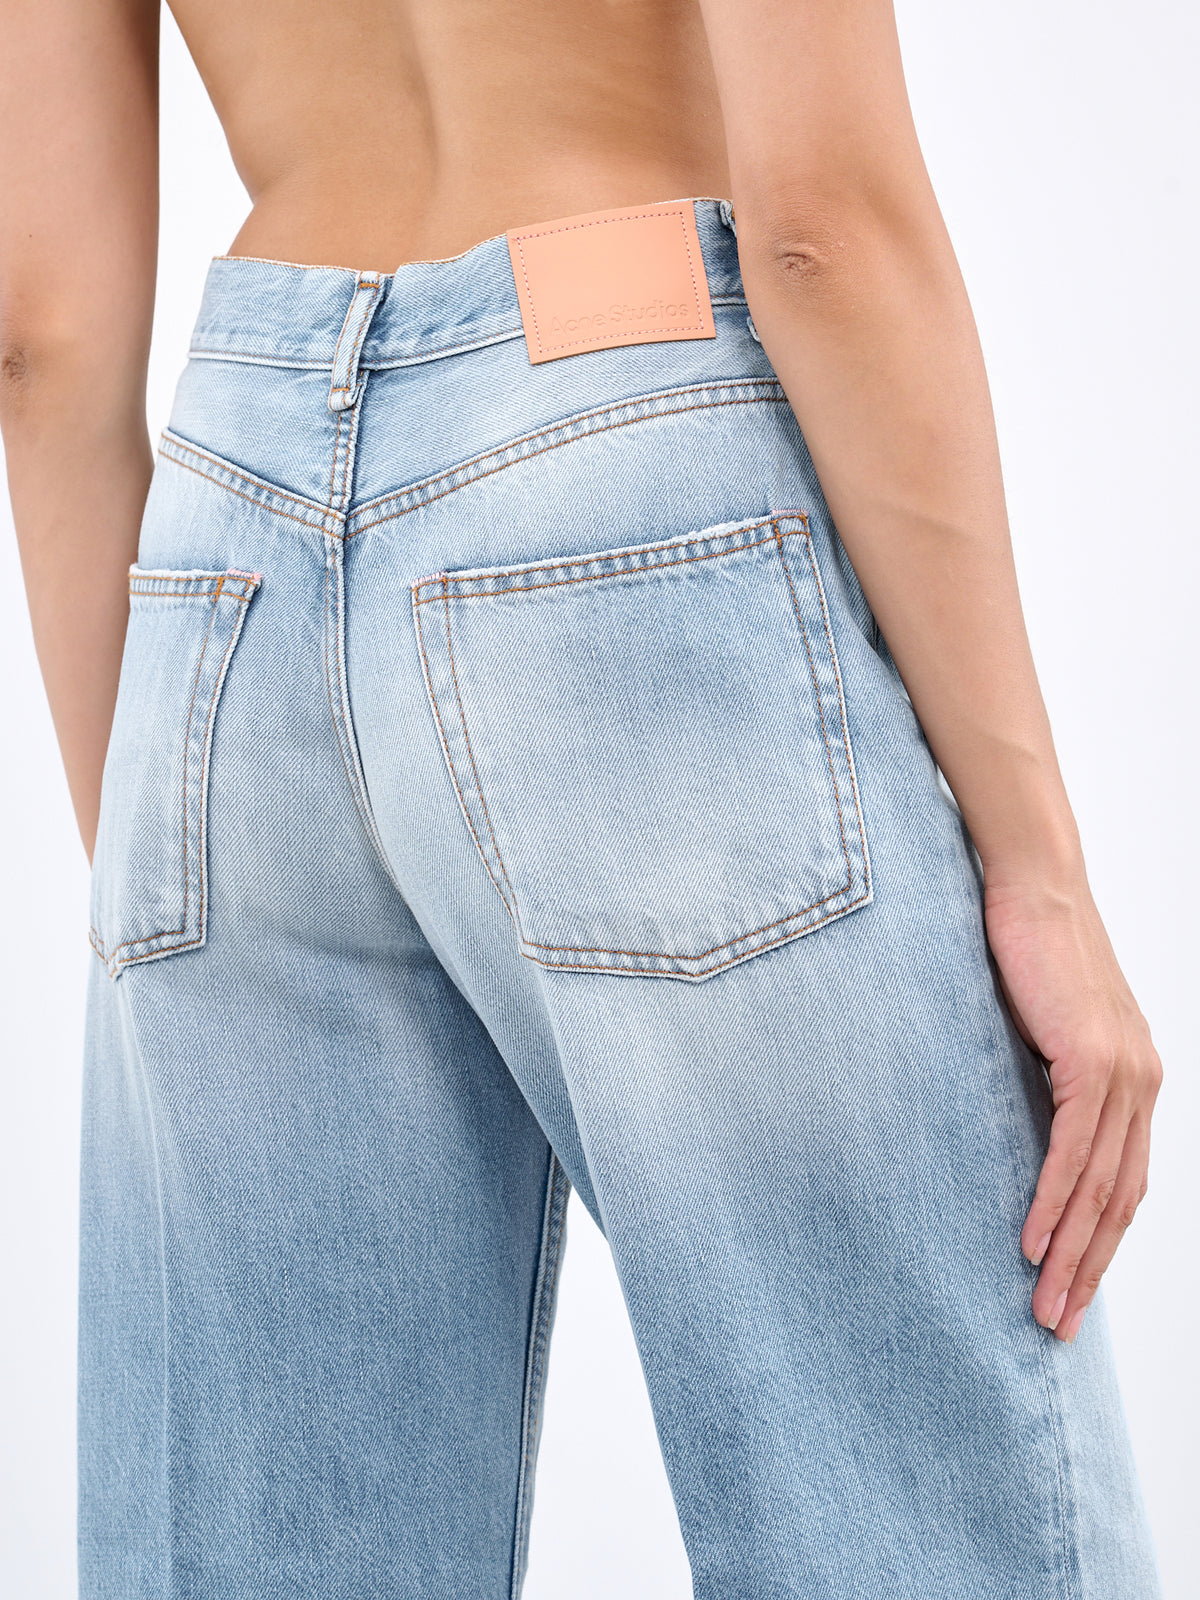 ACNE STUDIOS Jeans | H.Lorenzo - detail 2